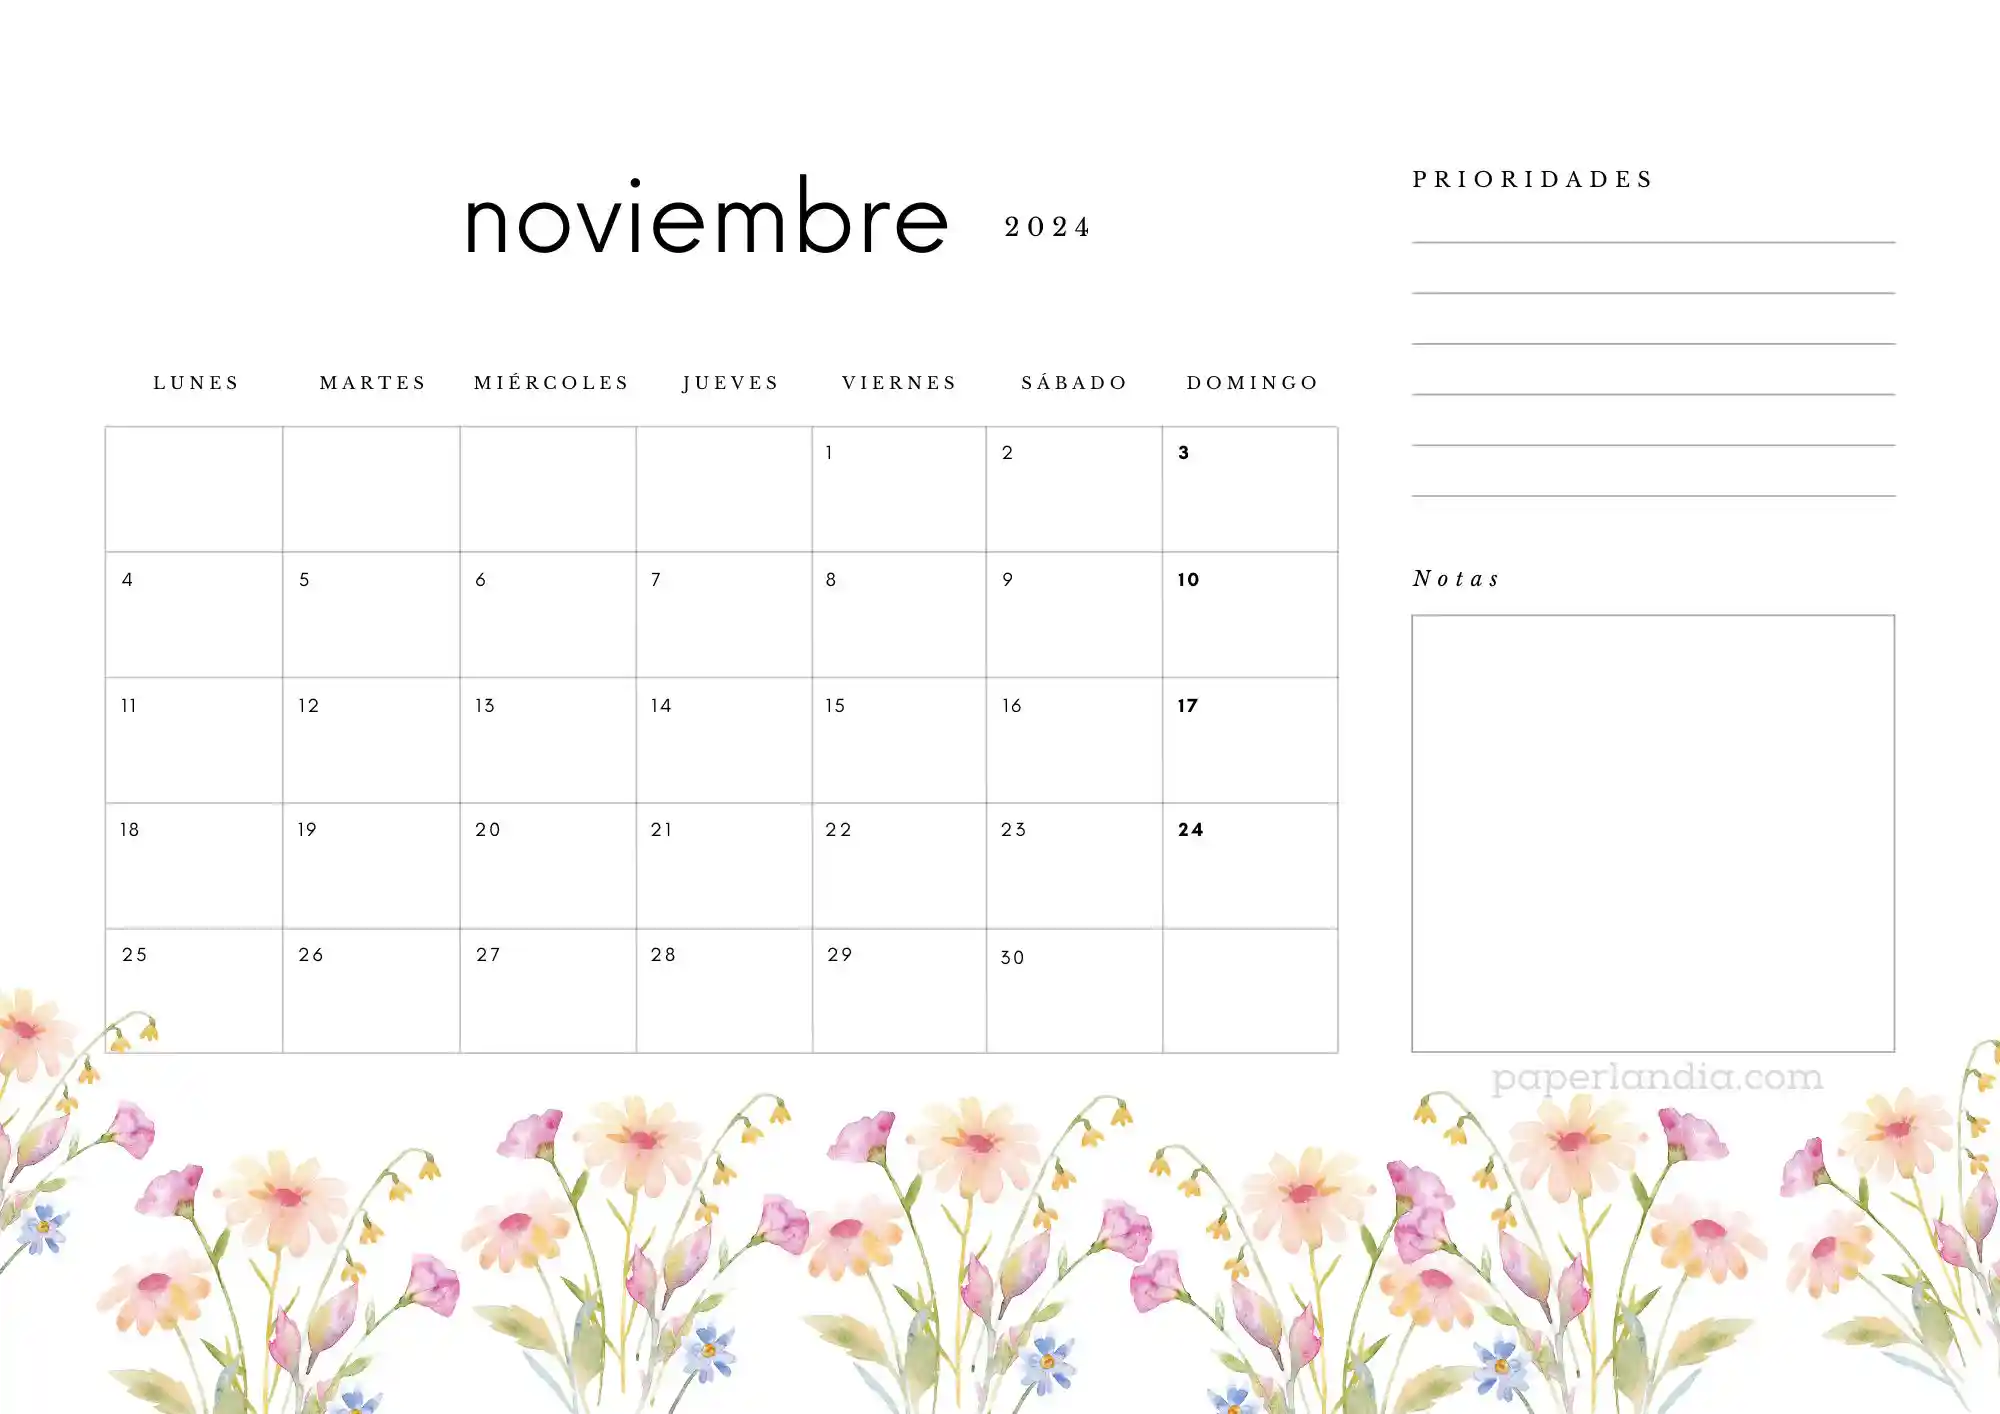 Calendario noviembre 2024 horizontal con prioridades notas y flores de campo